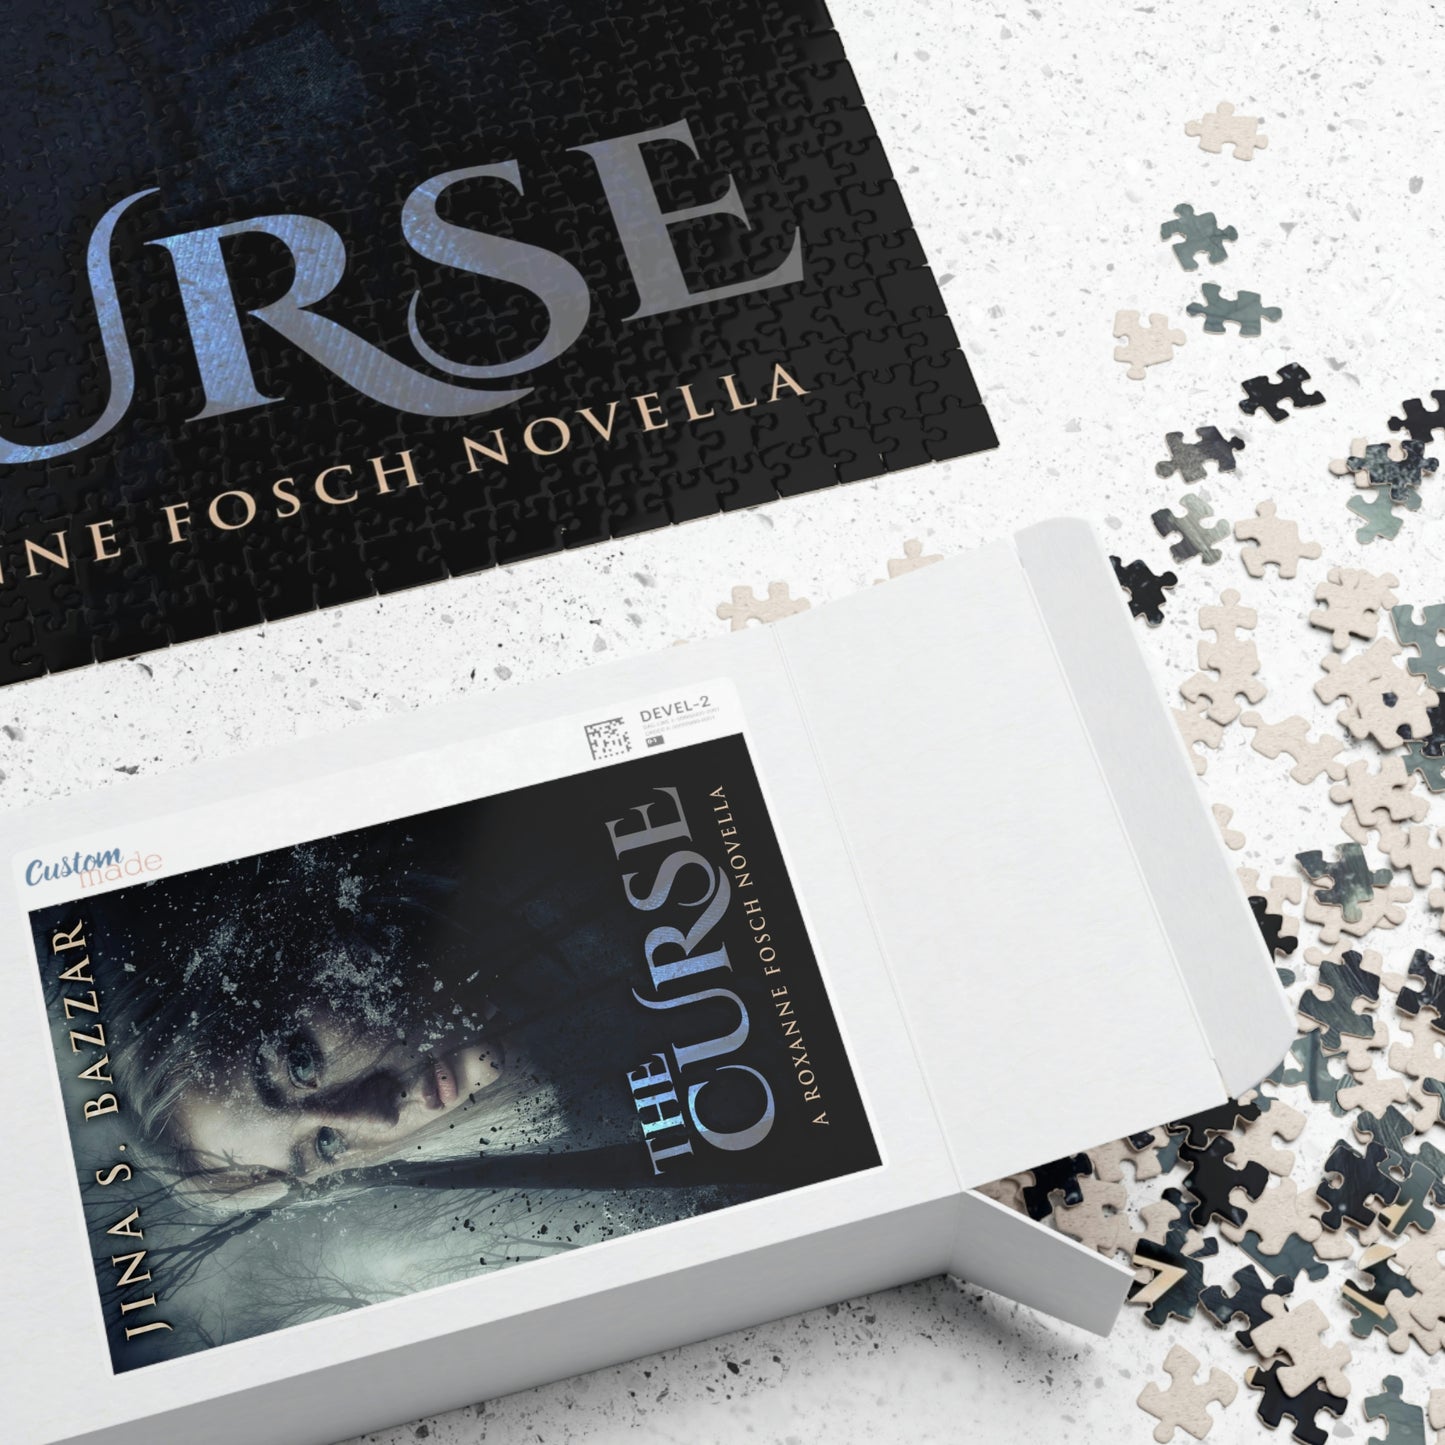 The Curse - 1000 Piece Jigsaw Puzzle